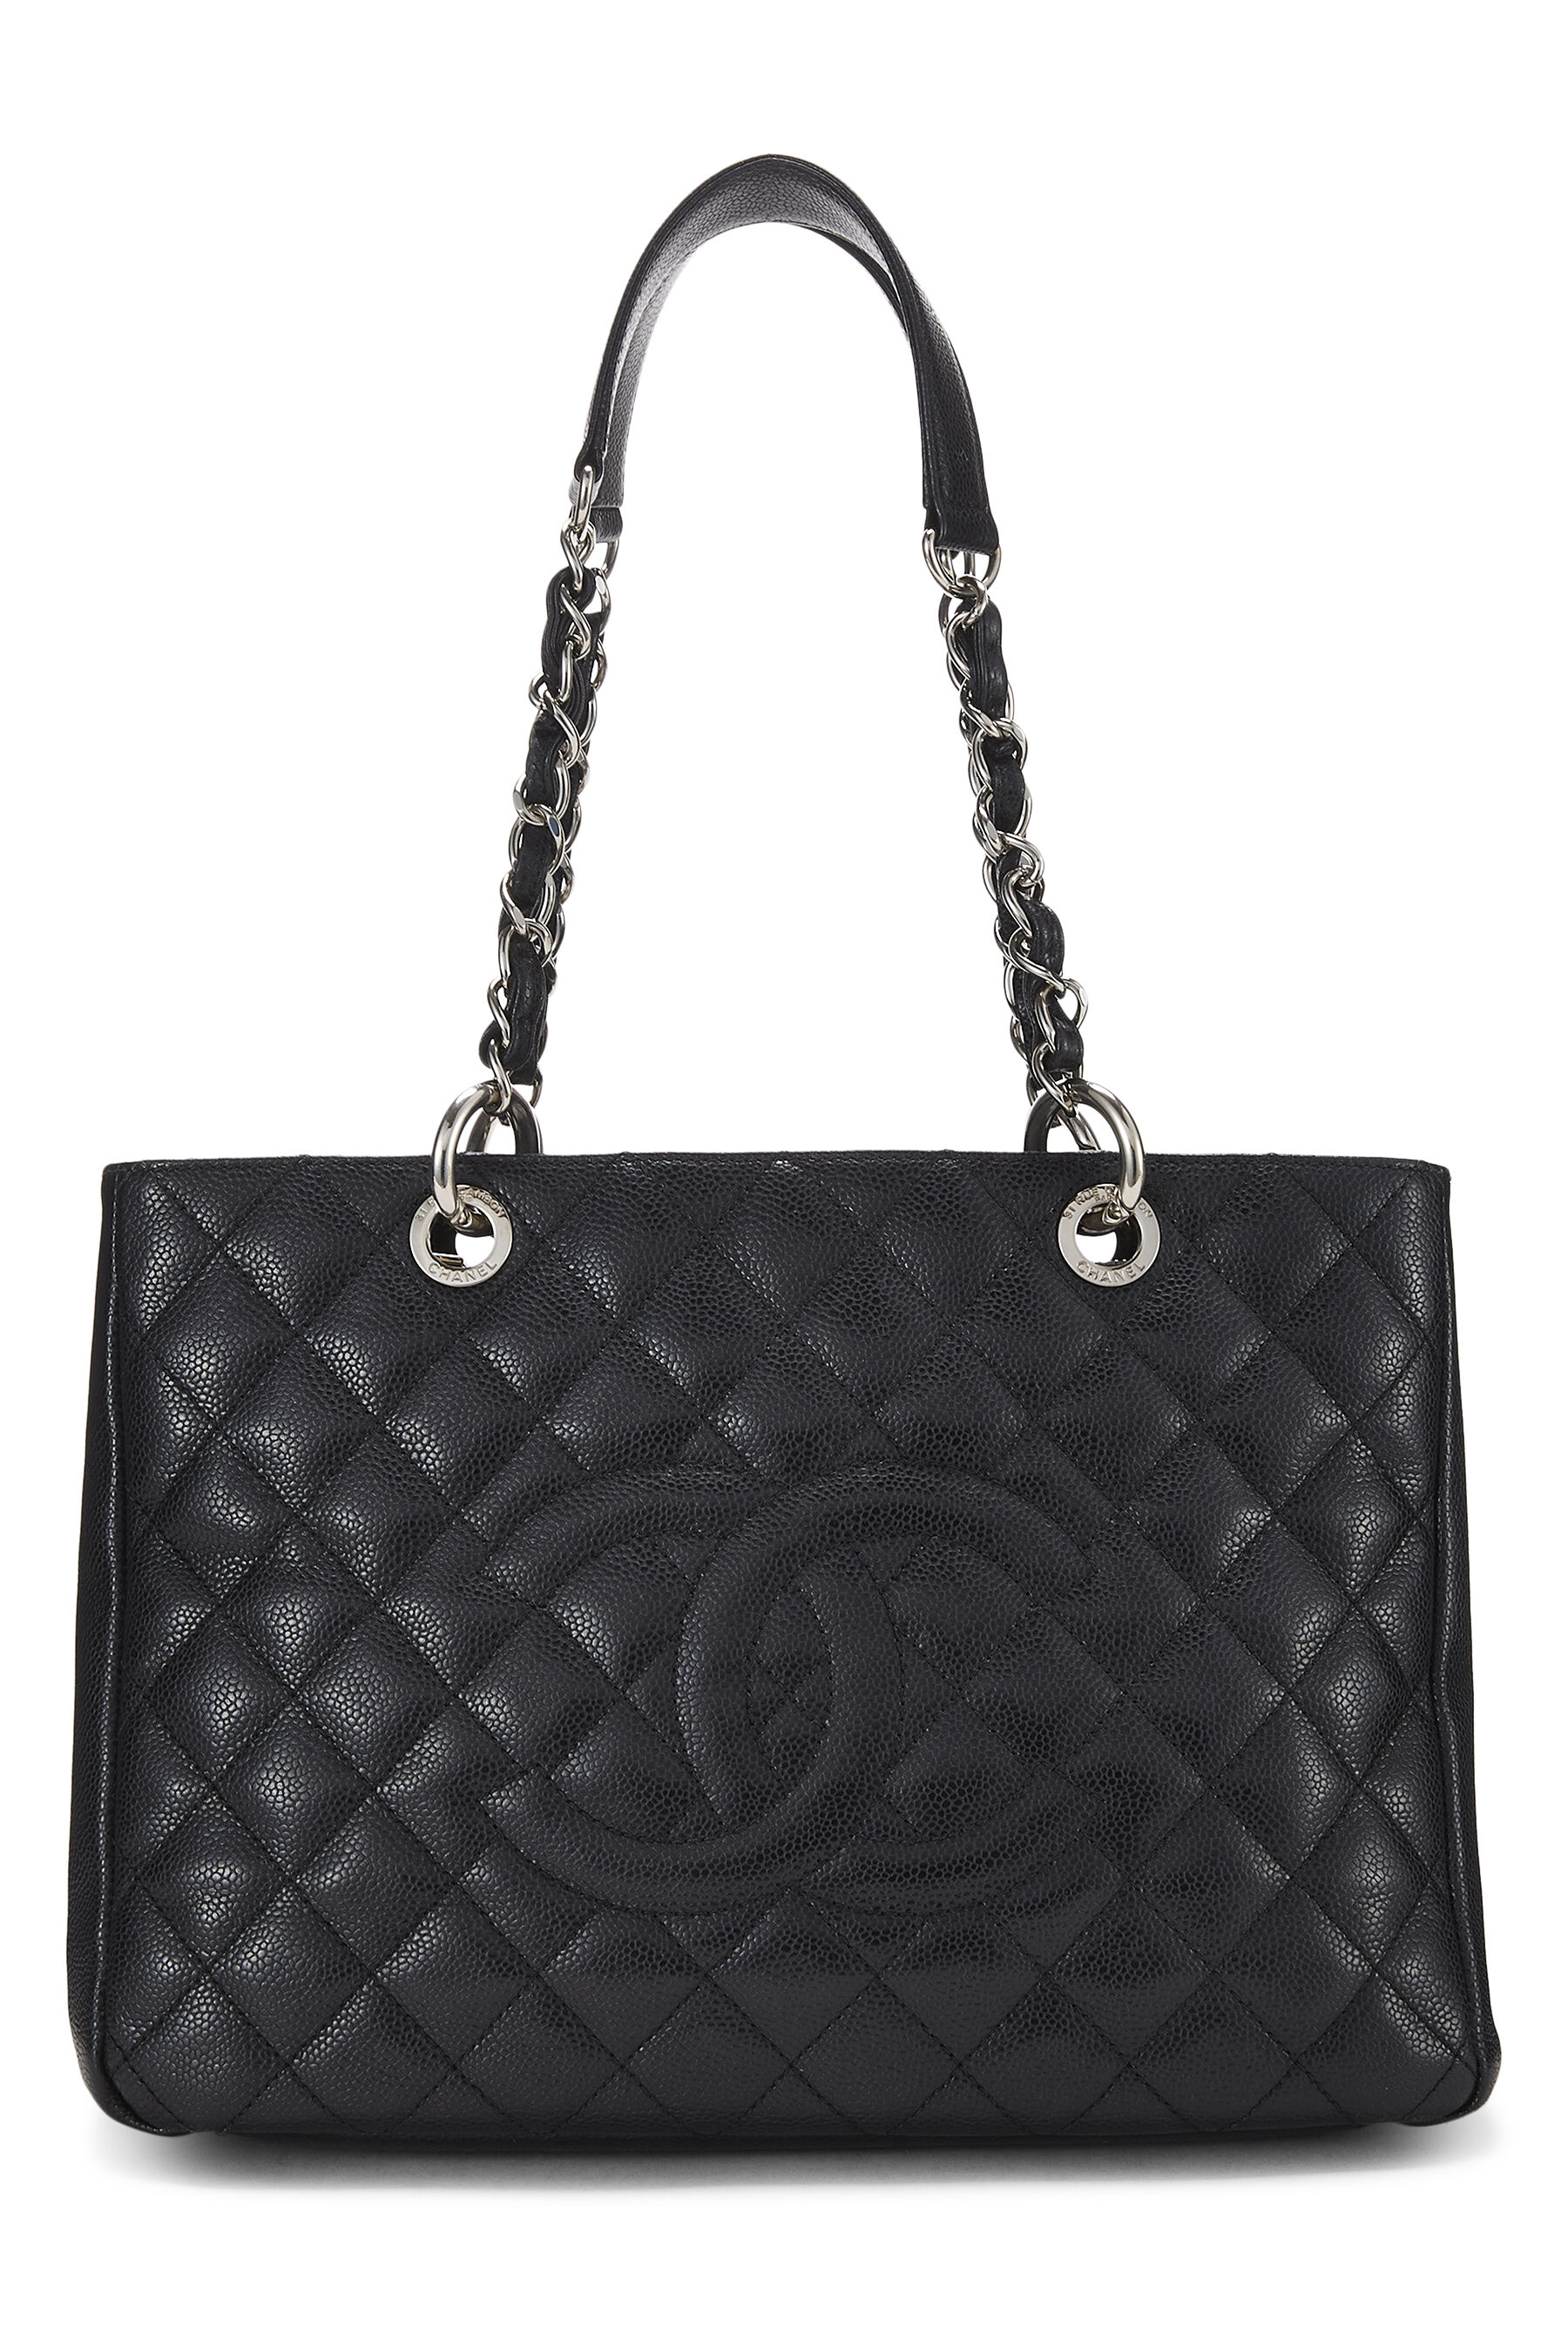 Chanel GST #wishlist  Bags, Chanel bag, Handbag